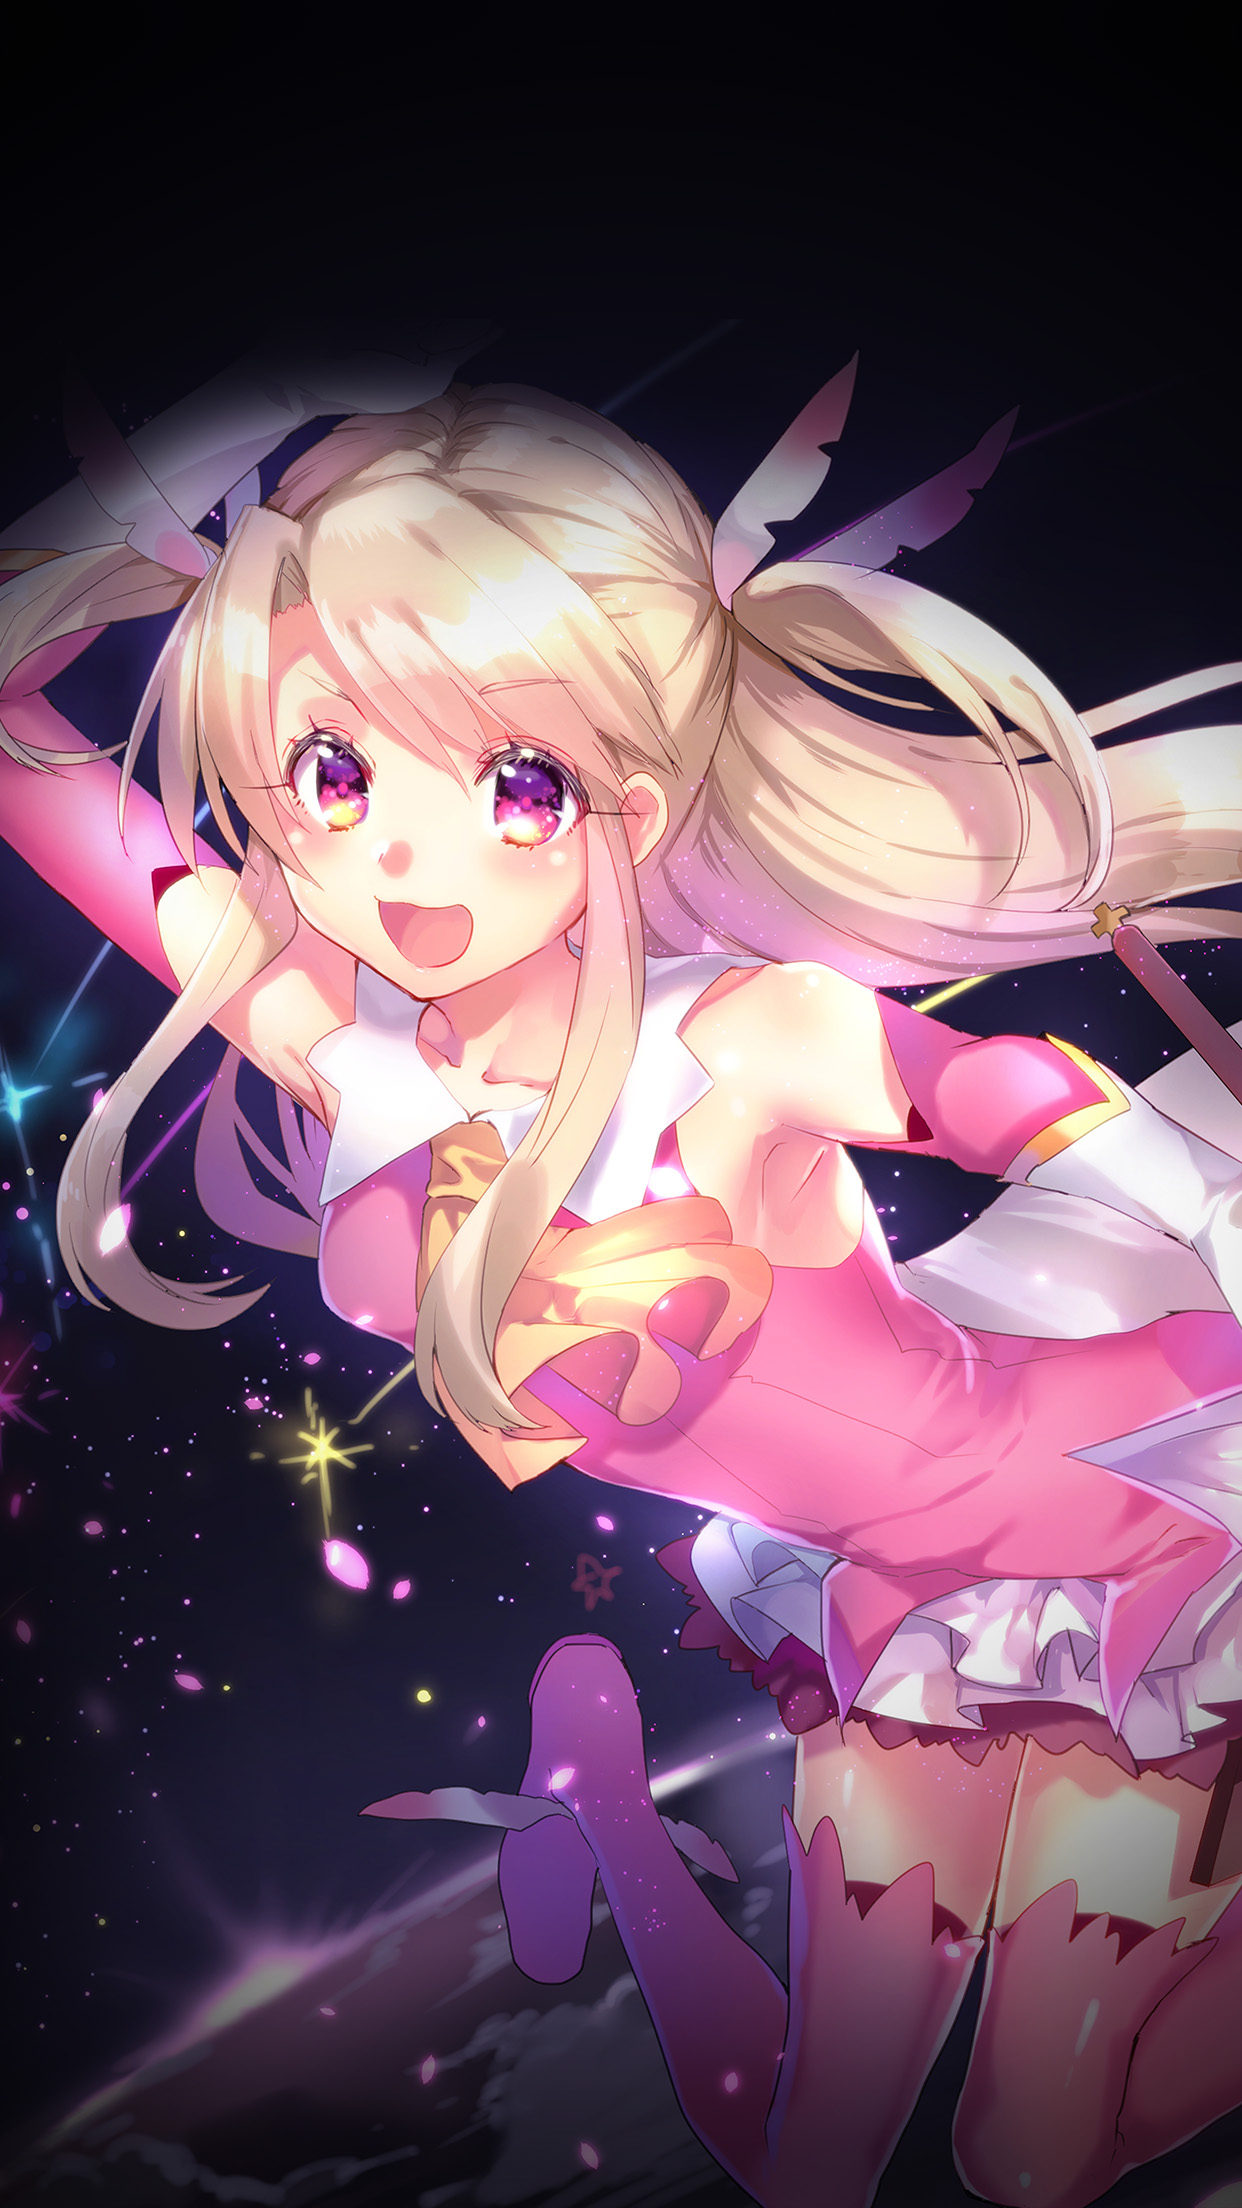 Prisma Illya Girl Anime Space Art Illustration Android wallpaper